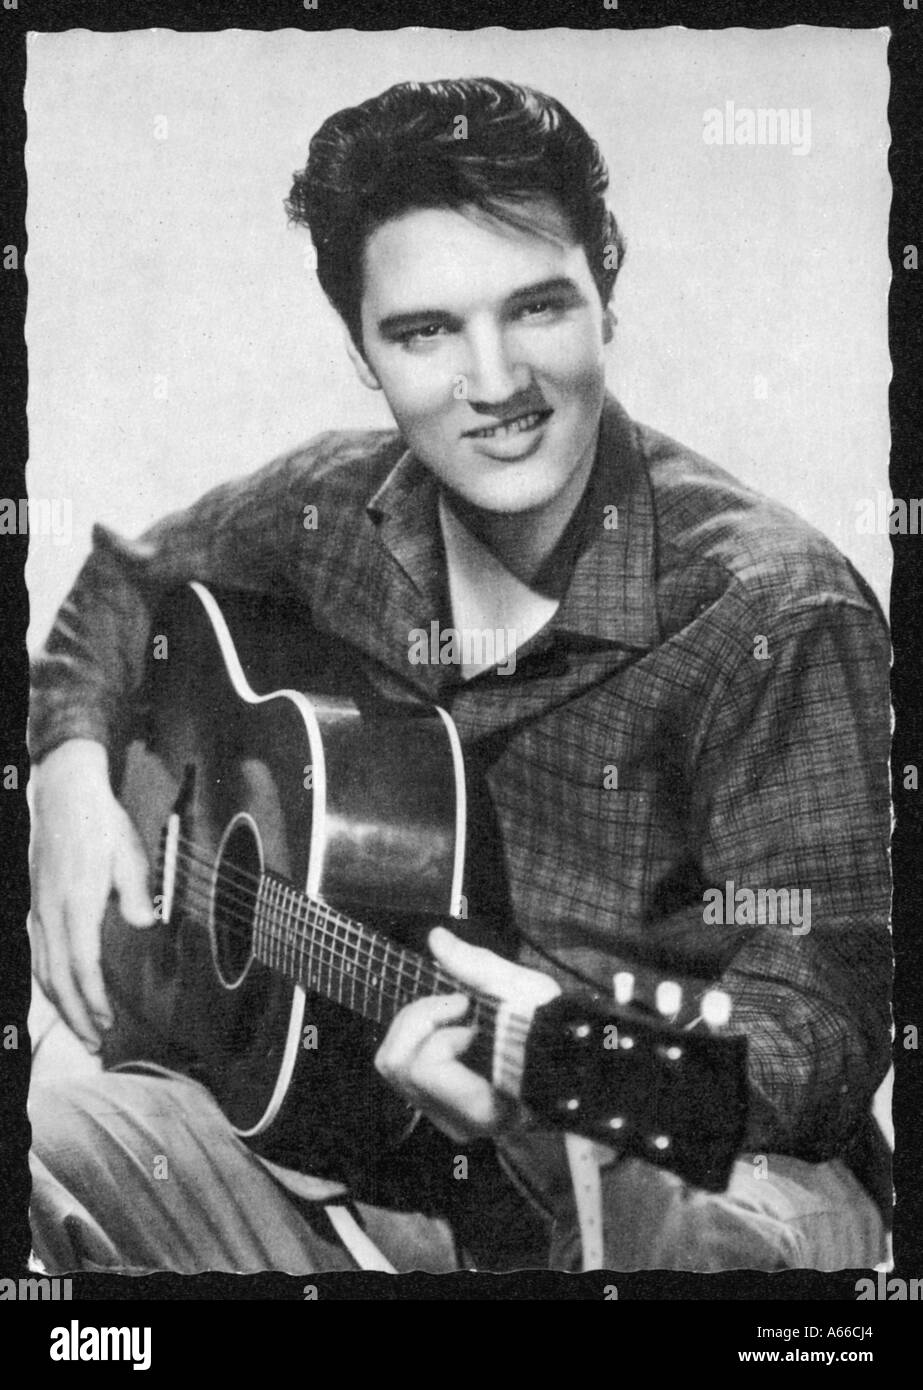 Elvis presley gitarre -Fotos und -Bildmaterial in hoher Auflösung – Alamy